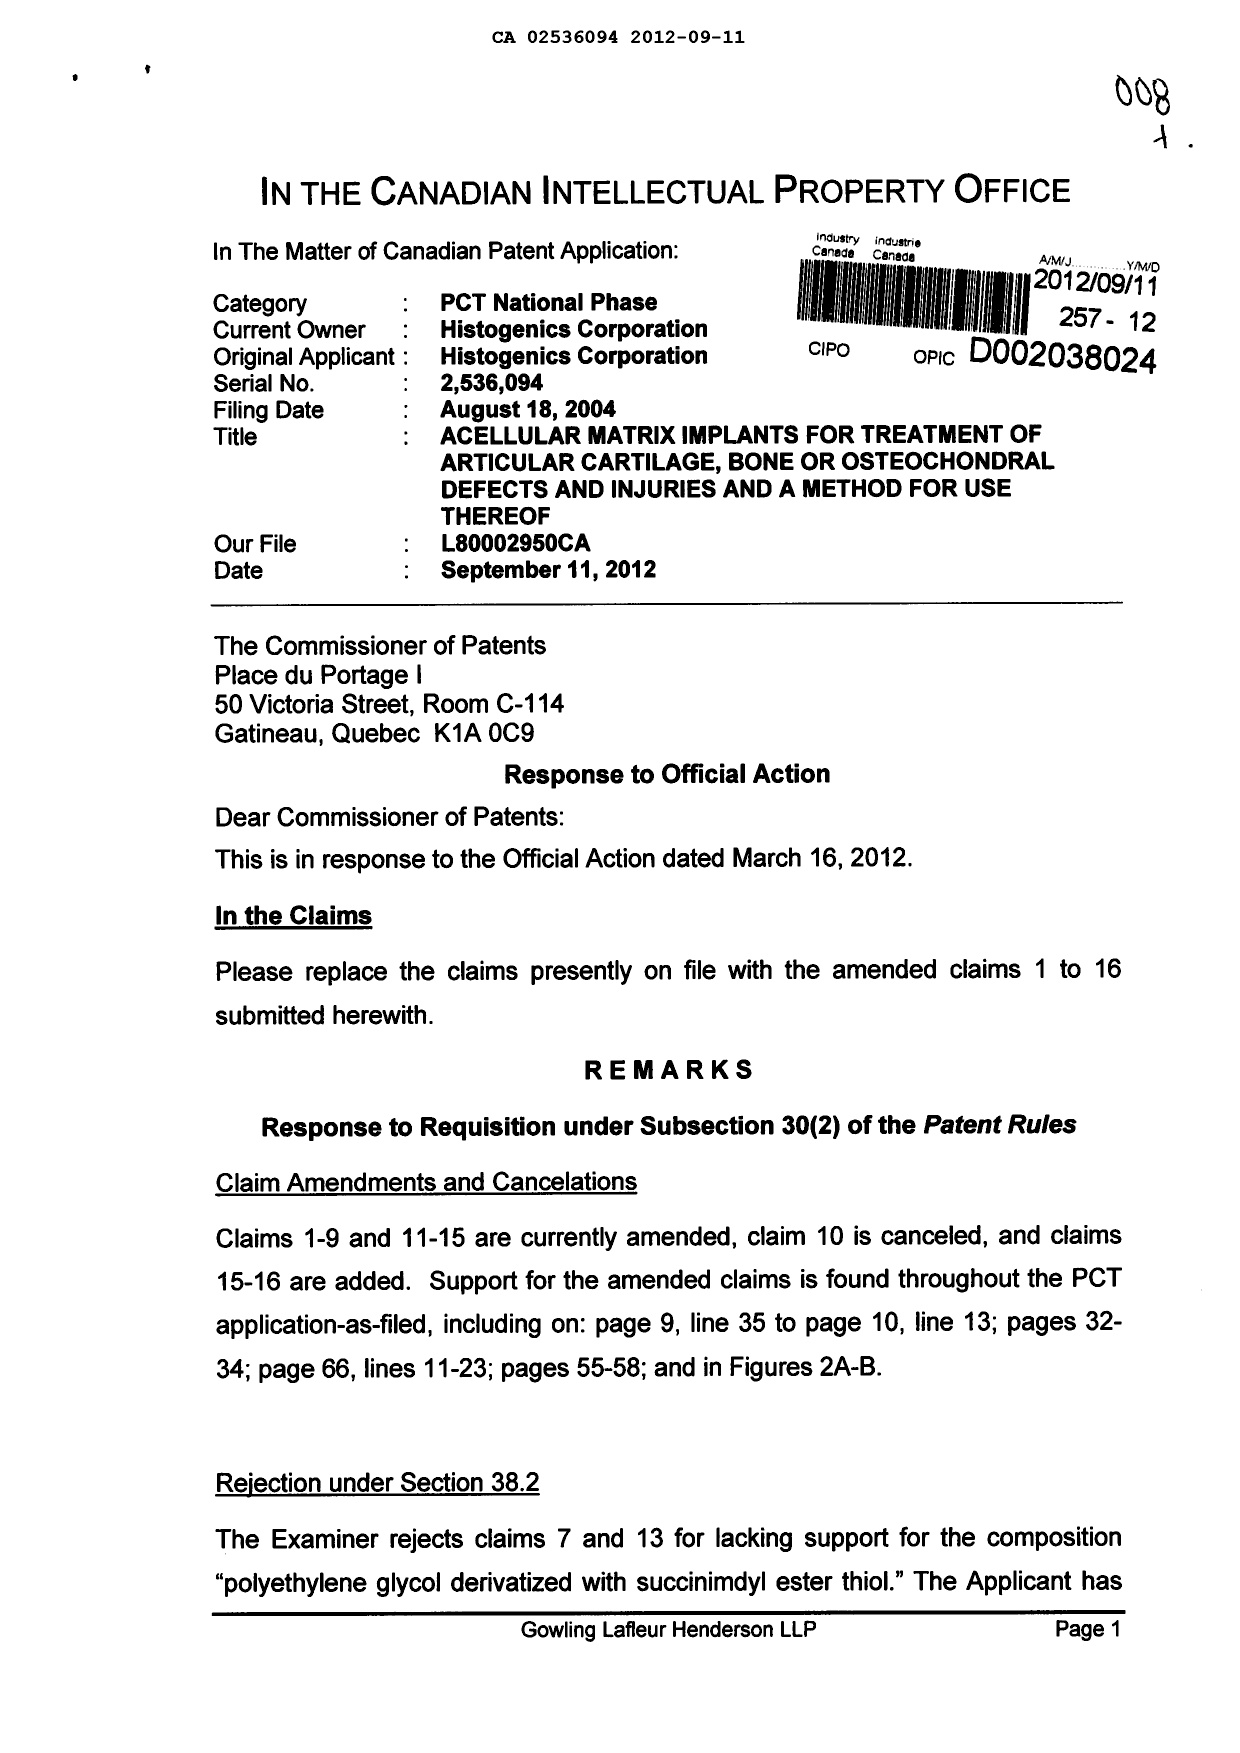 Canadian Patent Document 2536094. Prosecution-Amendment 20120911. Image 1 of 6